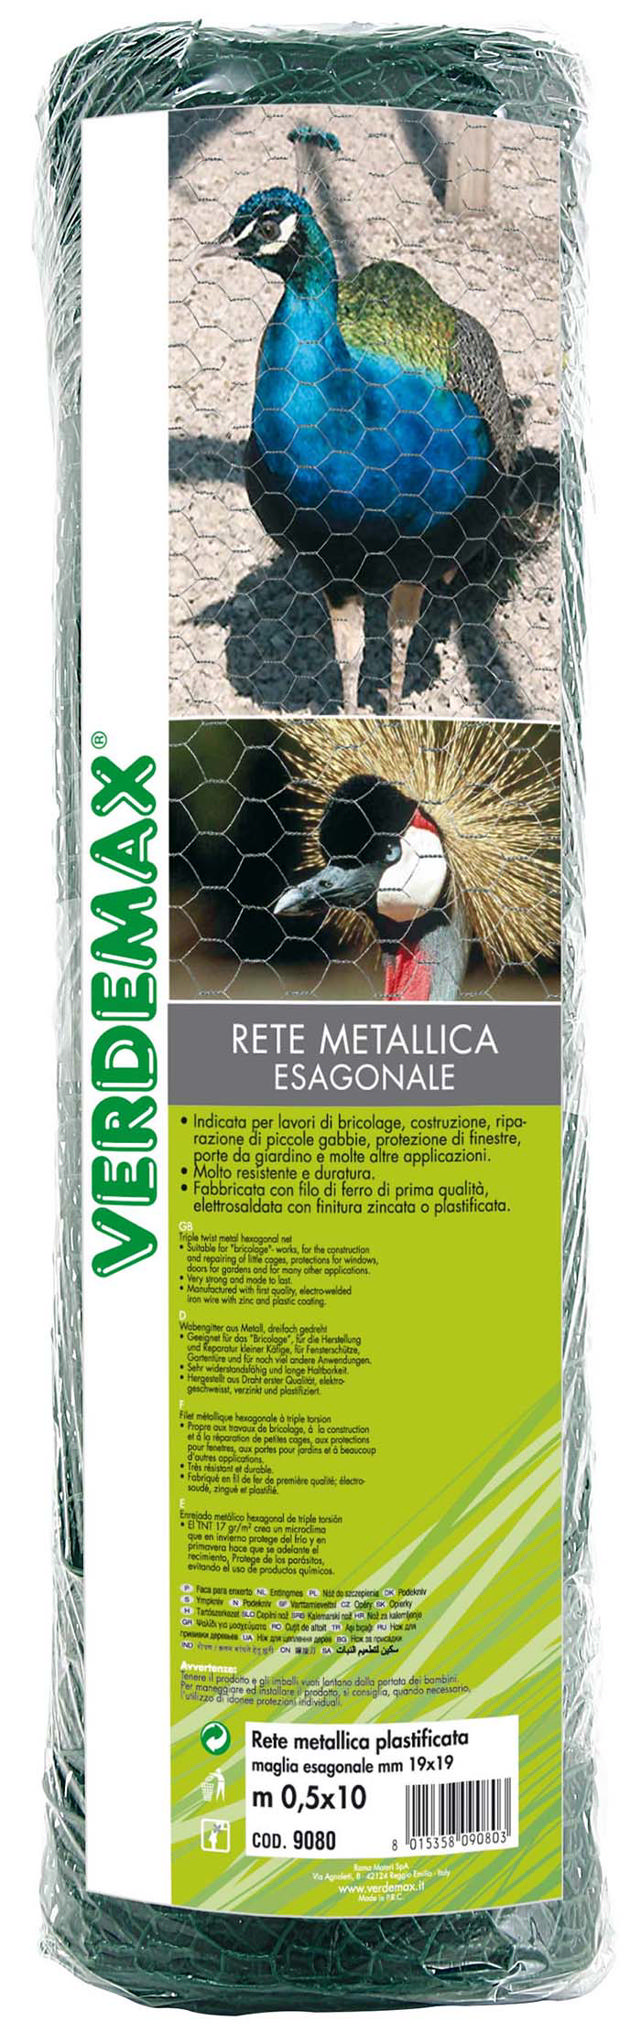 VERDEMAX METAL HEXAGONAL NET 0.5X10 GREEN